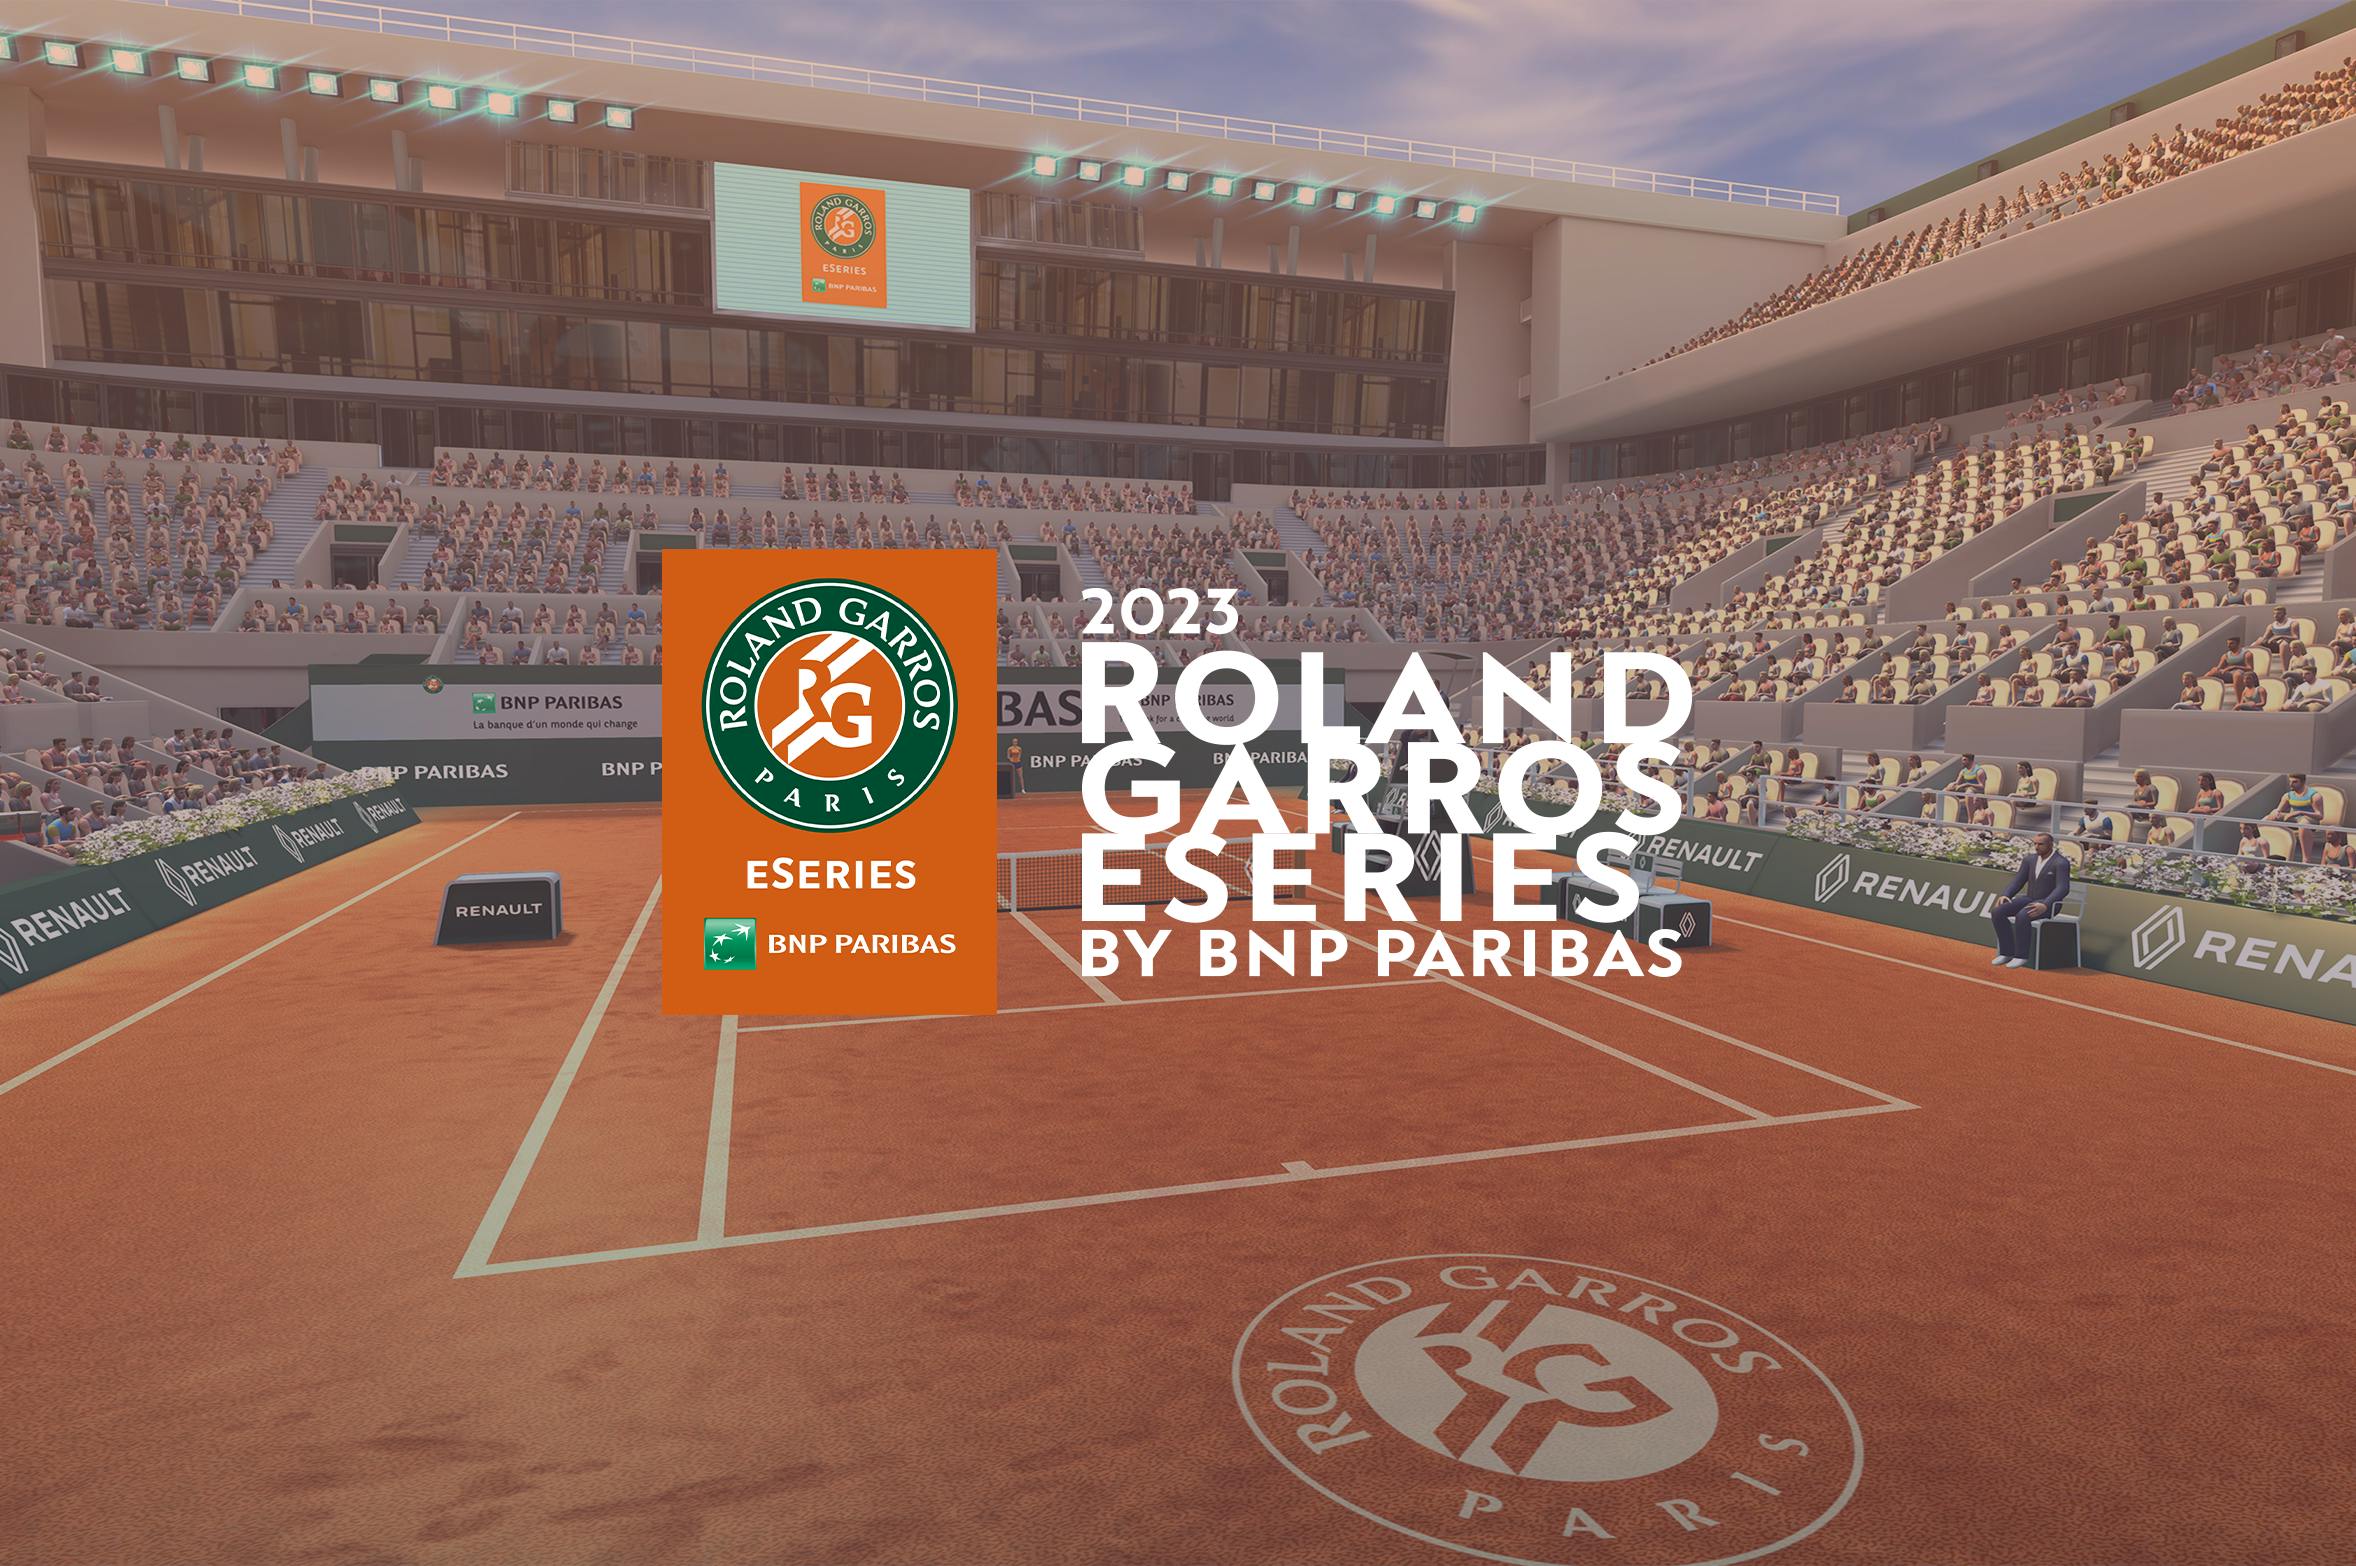 Roland-Garros eSeries by BNP Paribas 